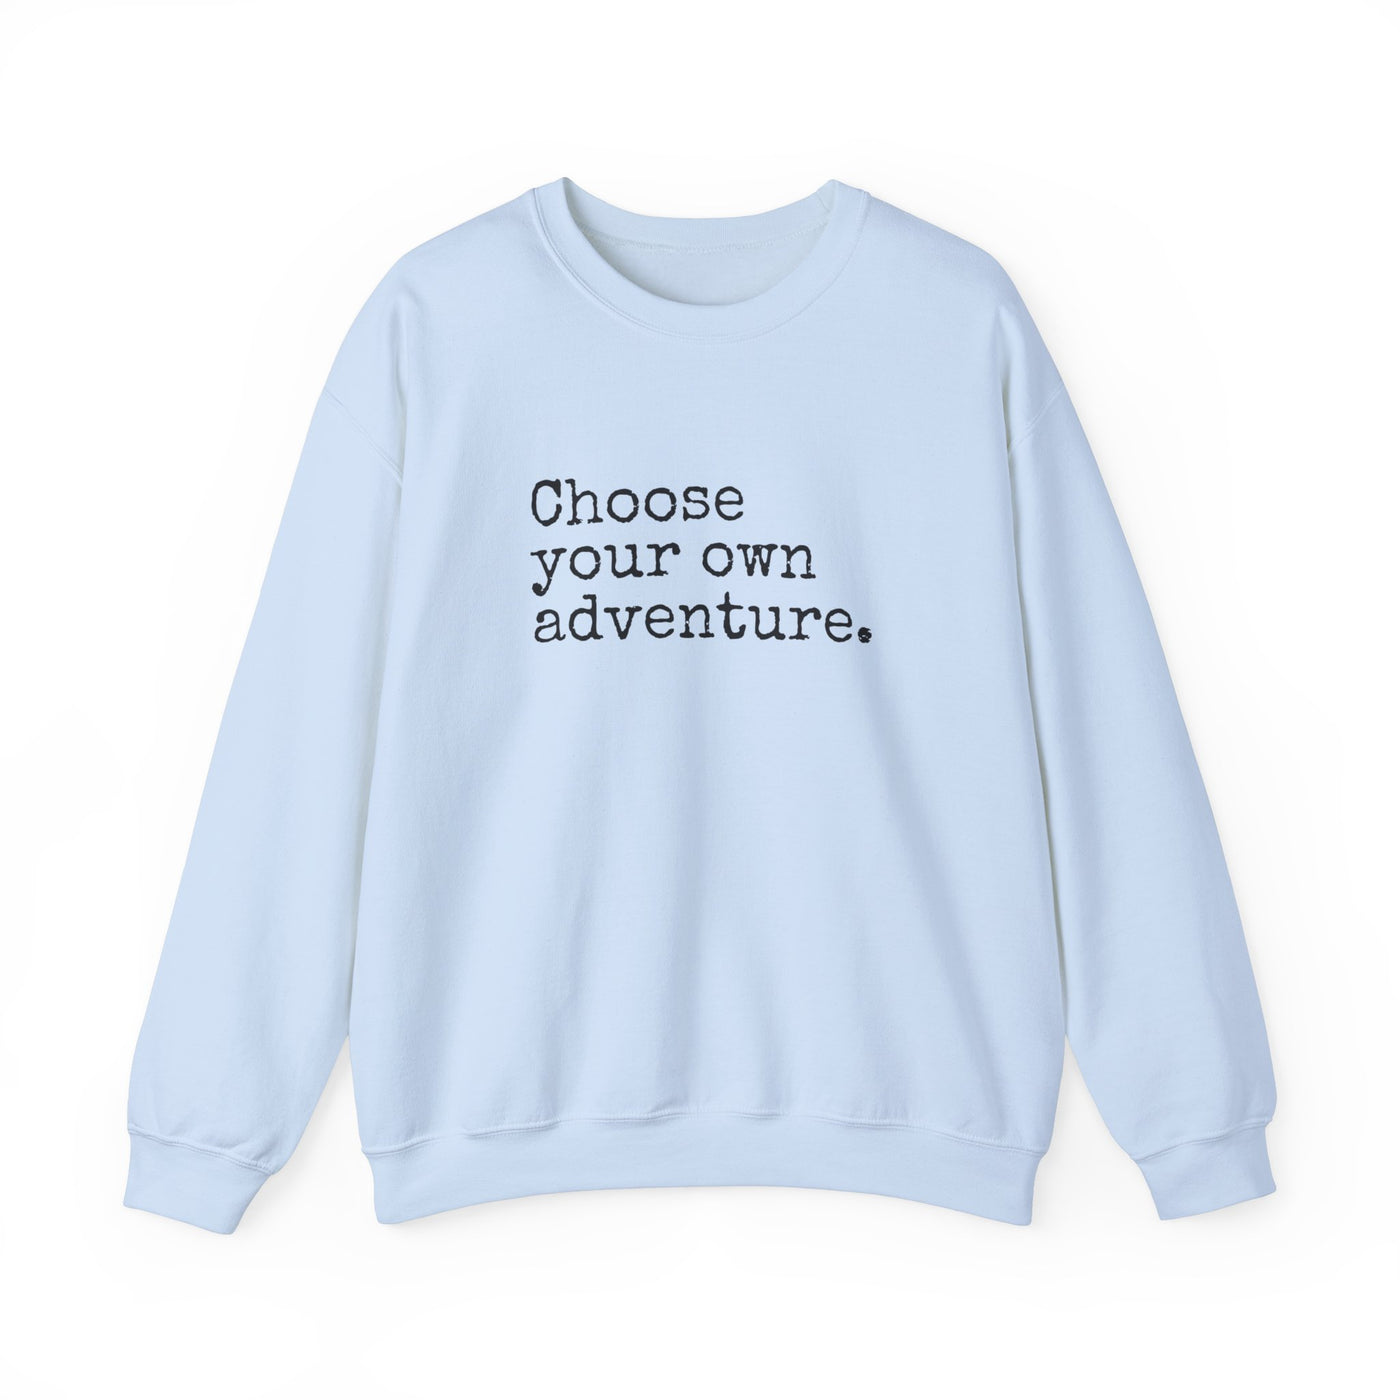 Choose Your Own Adventure Crewneck Sweatshirt